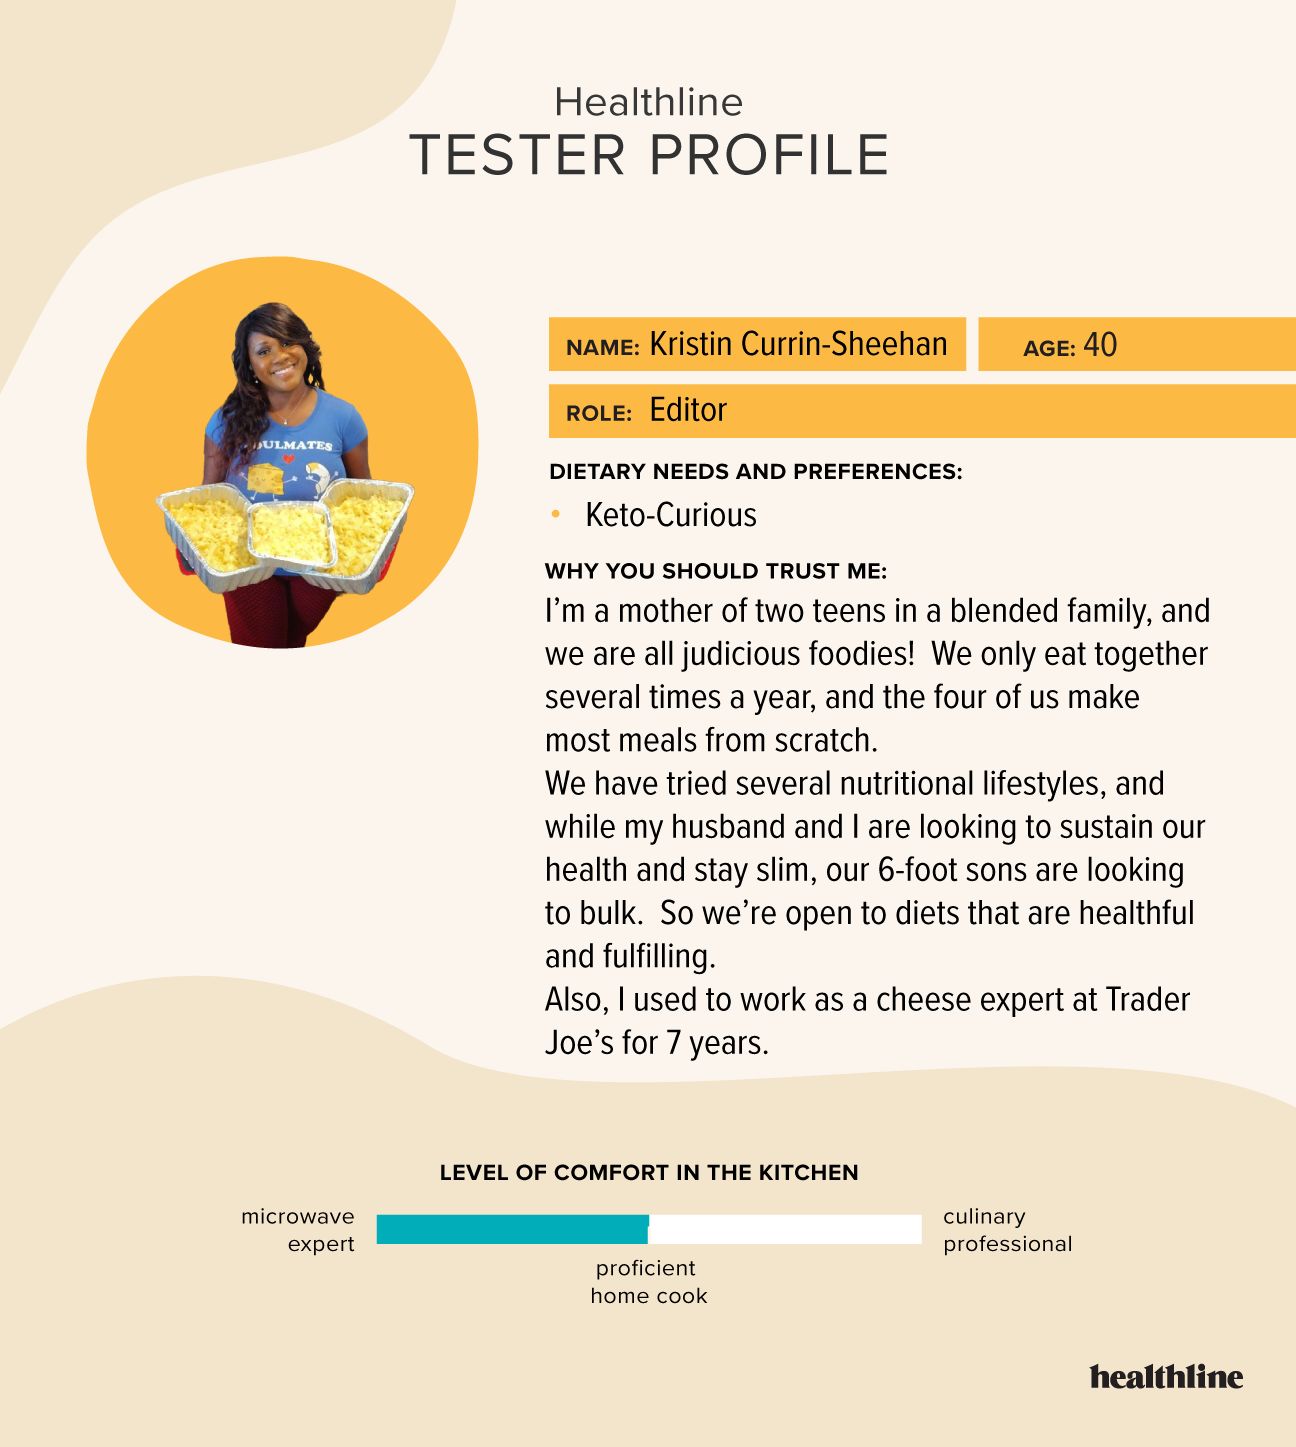 Tester profile for Kristin Currin-Sheehan